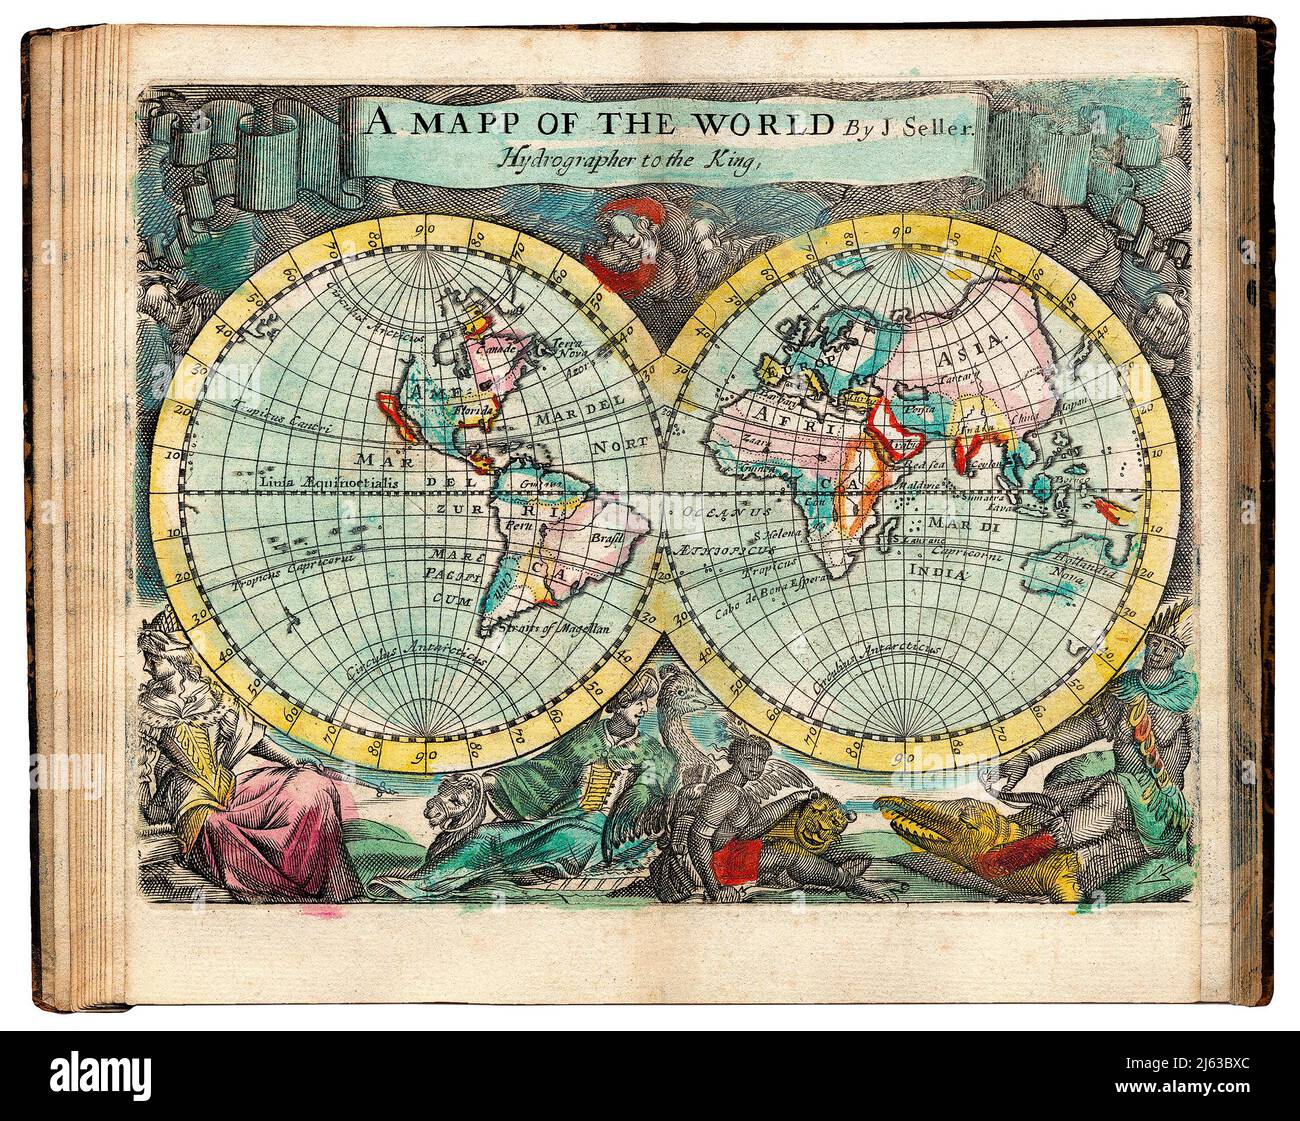 World Map 1682 by John Seller in Atlas format. Stock Photo